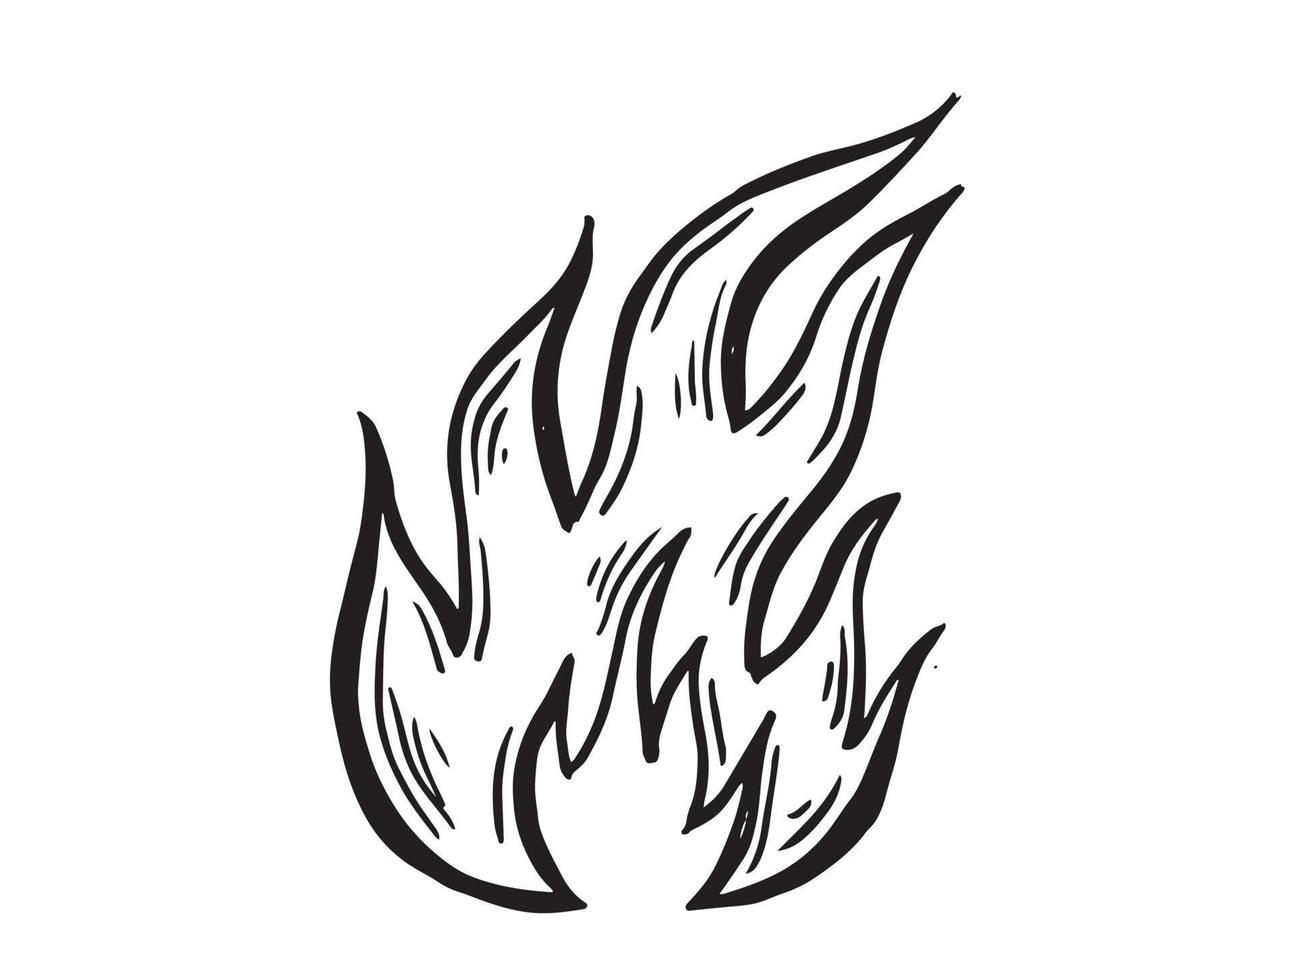 Bonfire, hand drawn illustration, flame, burning. vector